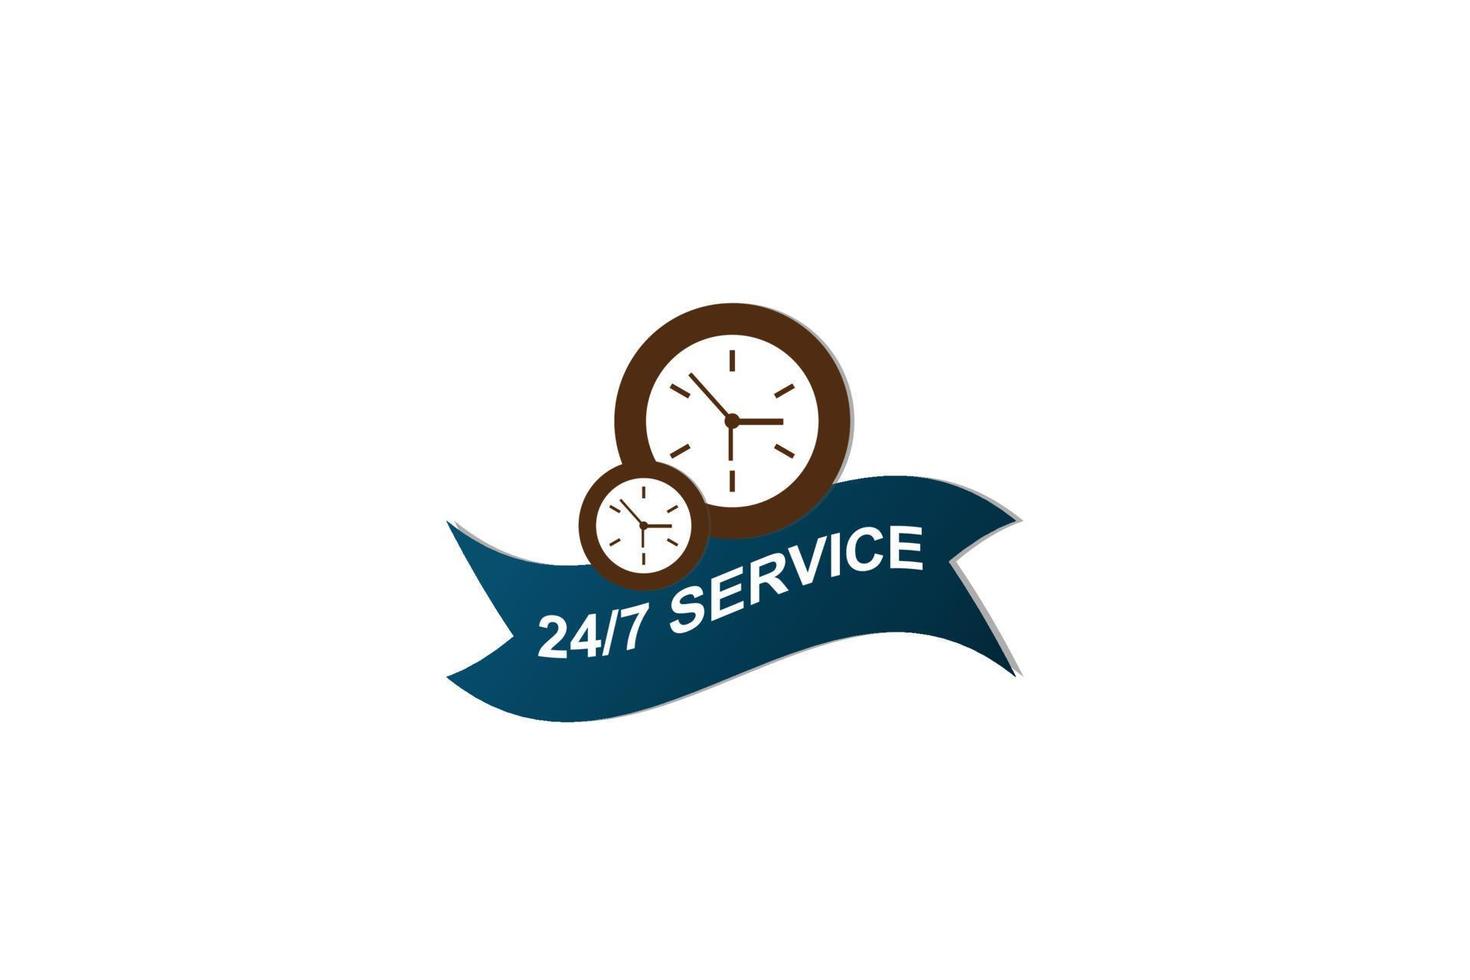 24-7 Servicio concepto vector